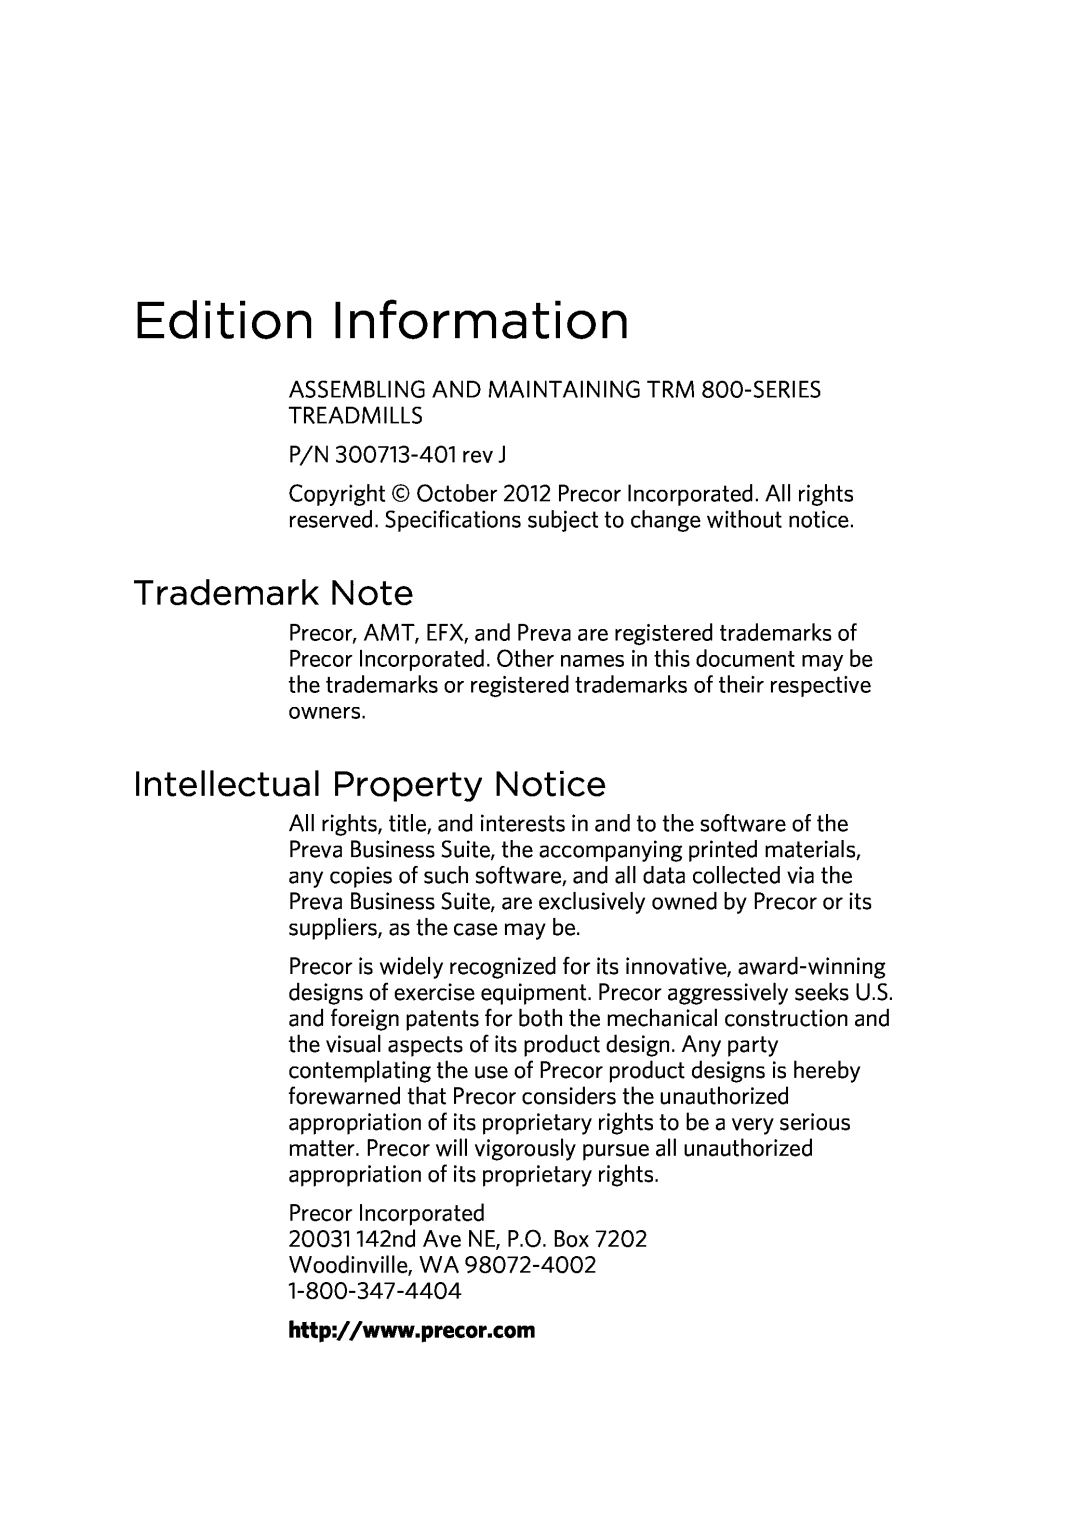 Precor P80 manual Edition Information, Trademark Note, Intellectual Property Notice, P/N 300713-401rev J 